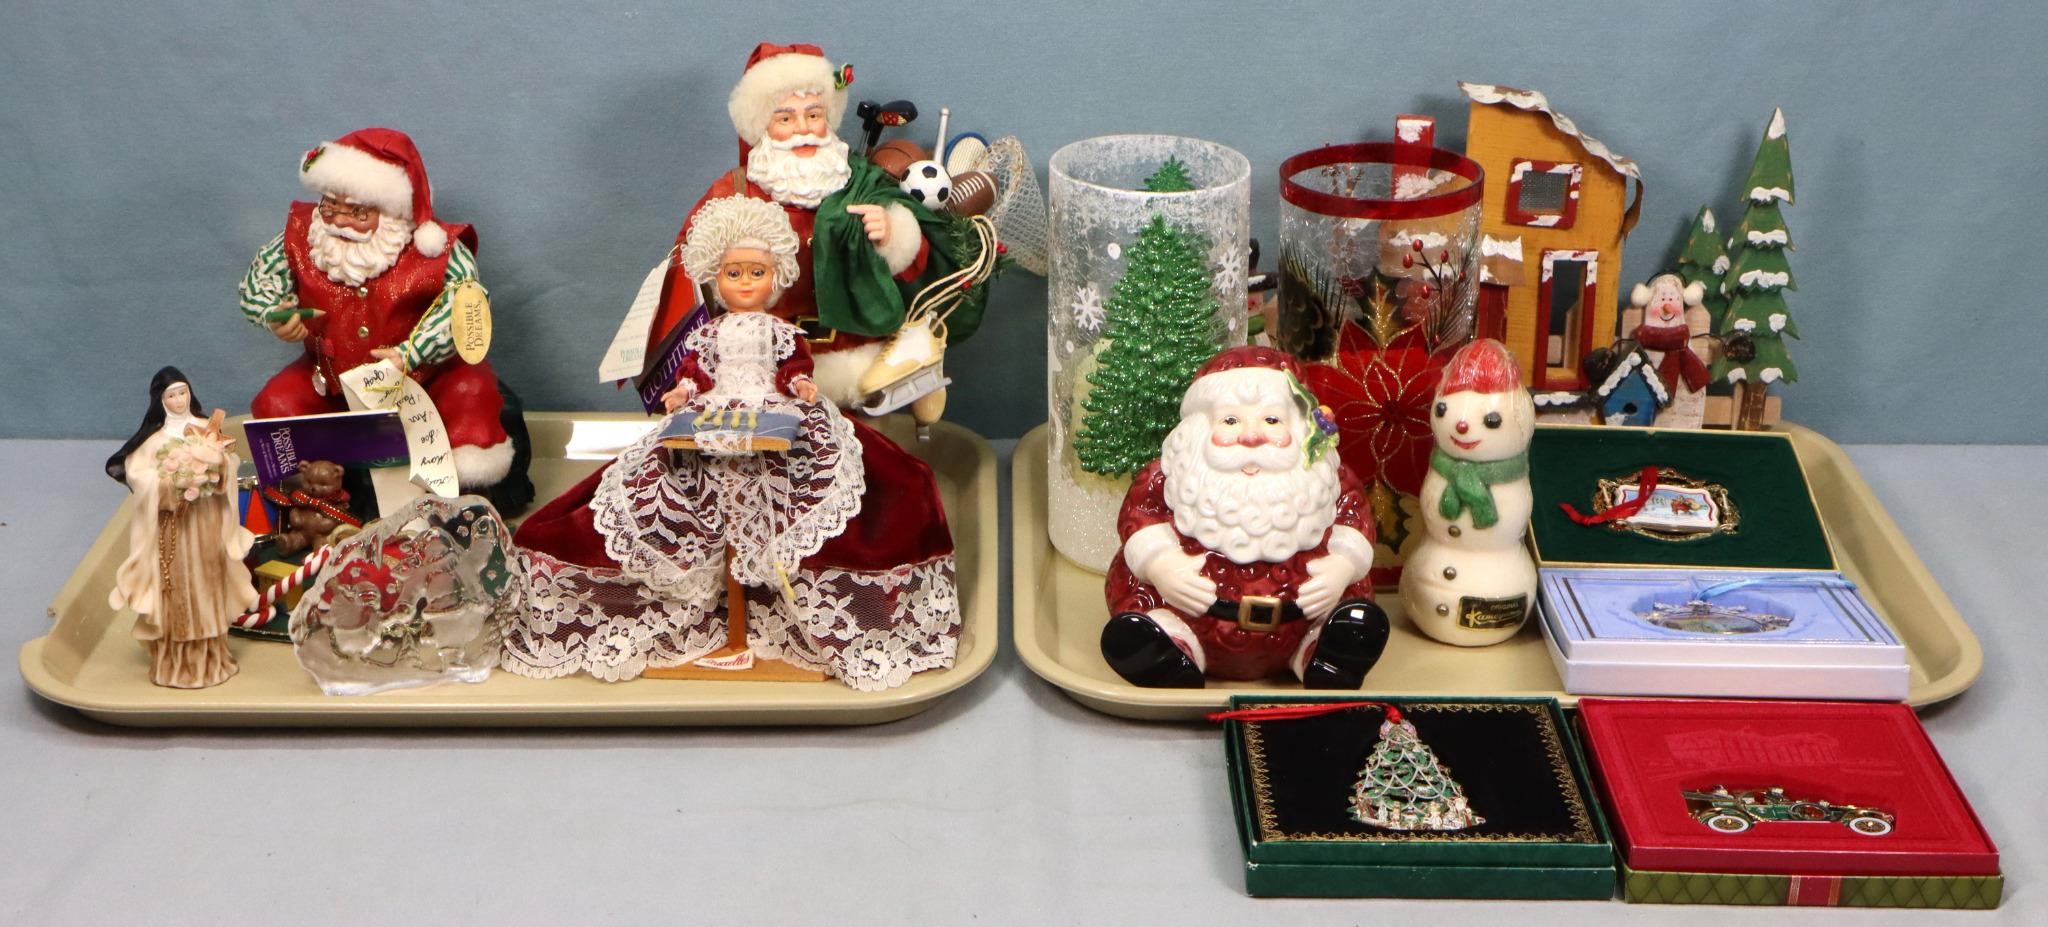 Christmas Ornaments, Figurines, etc.